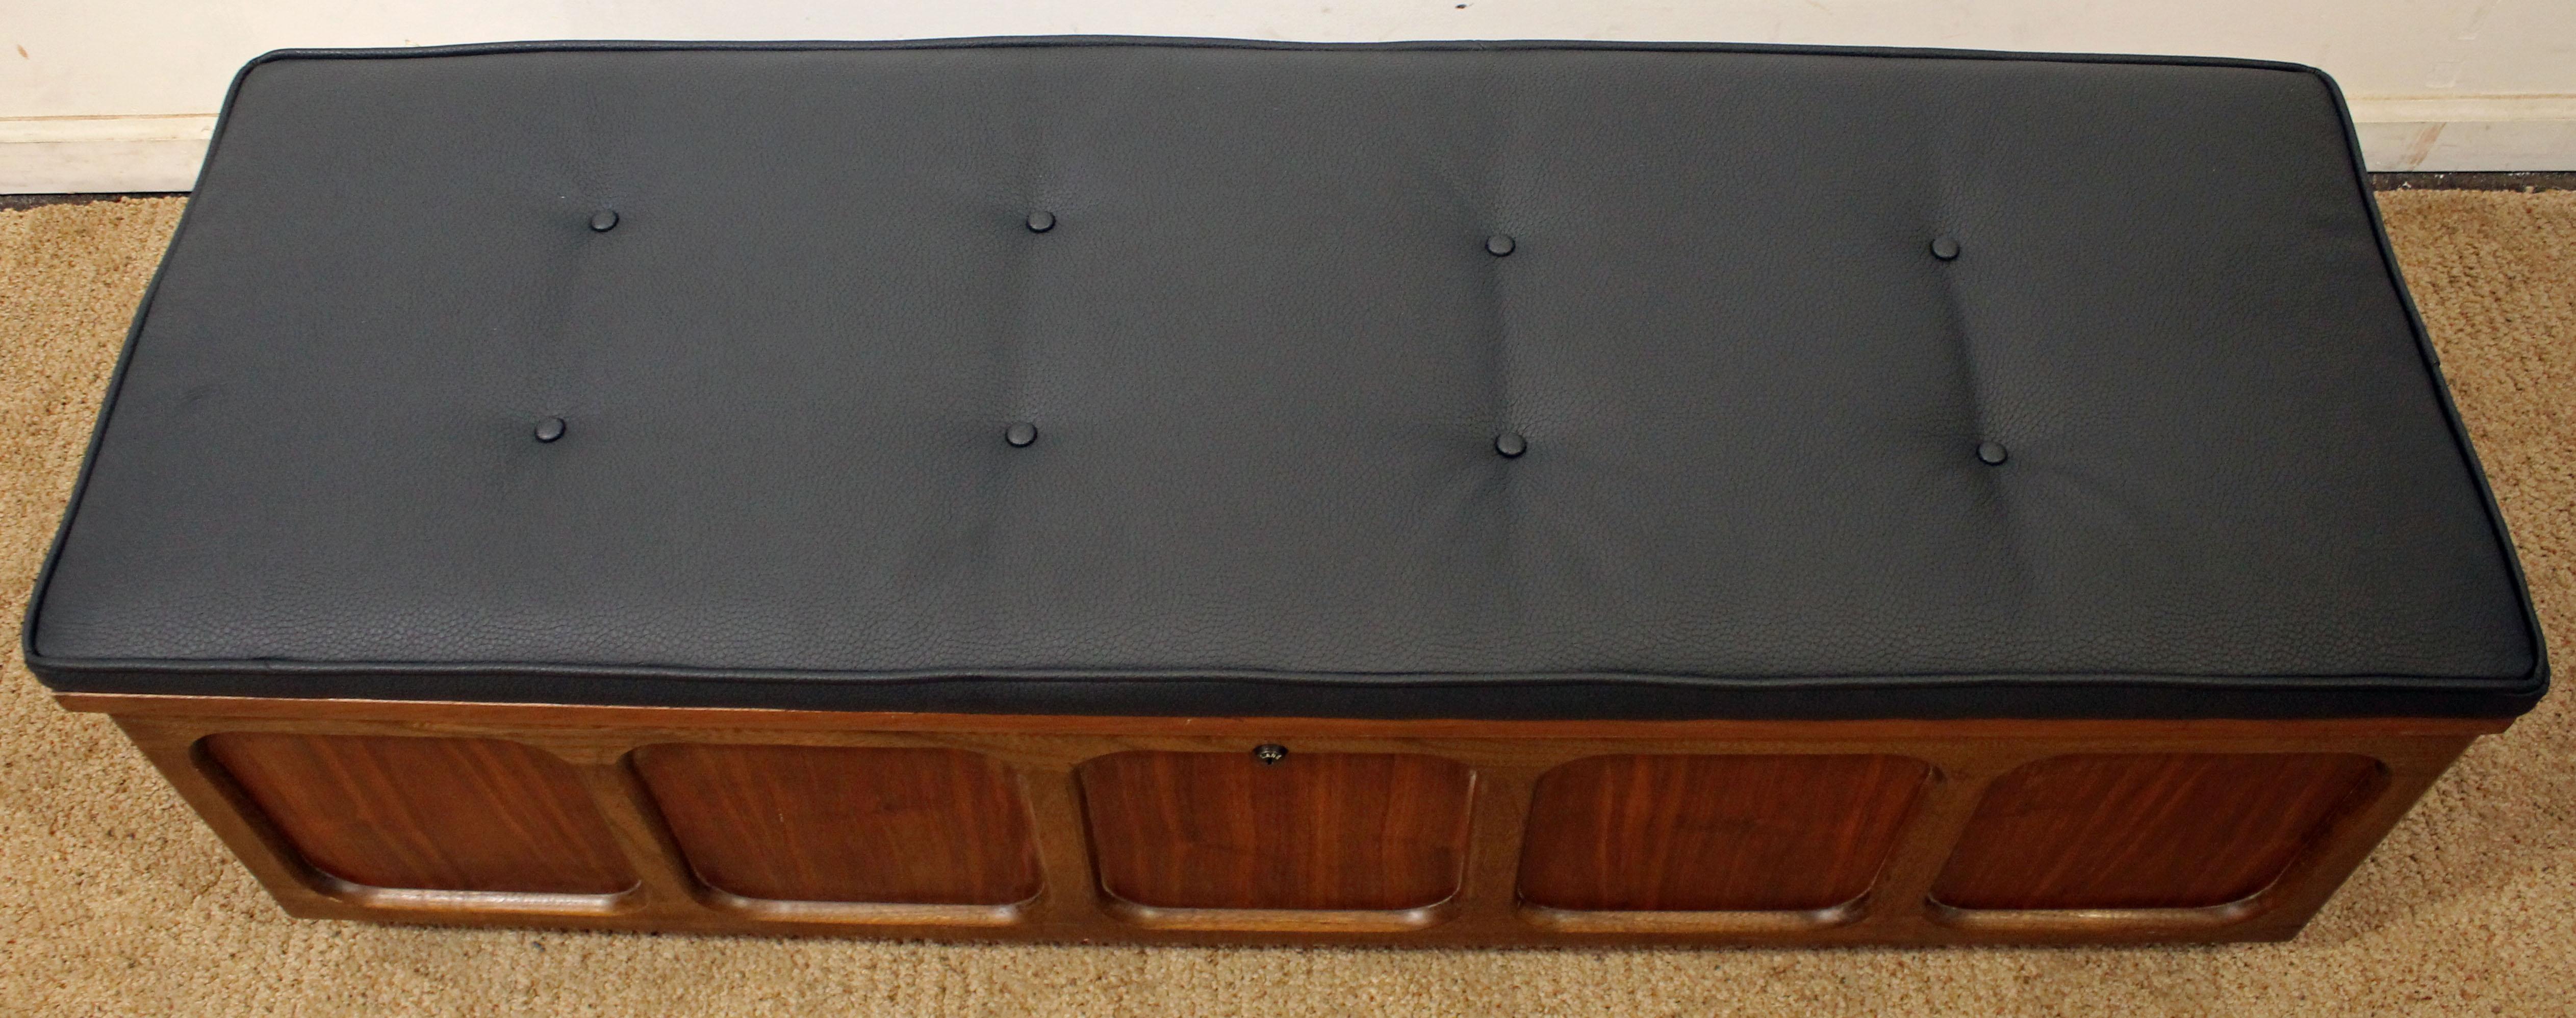 lane cedar chest with cushion top